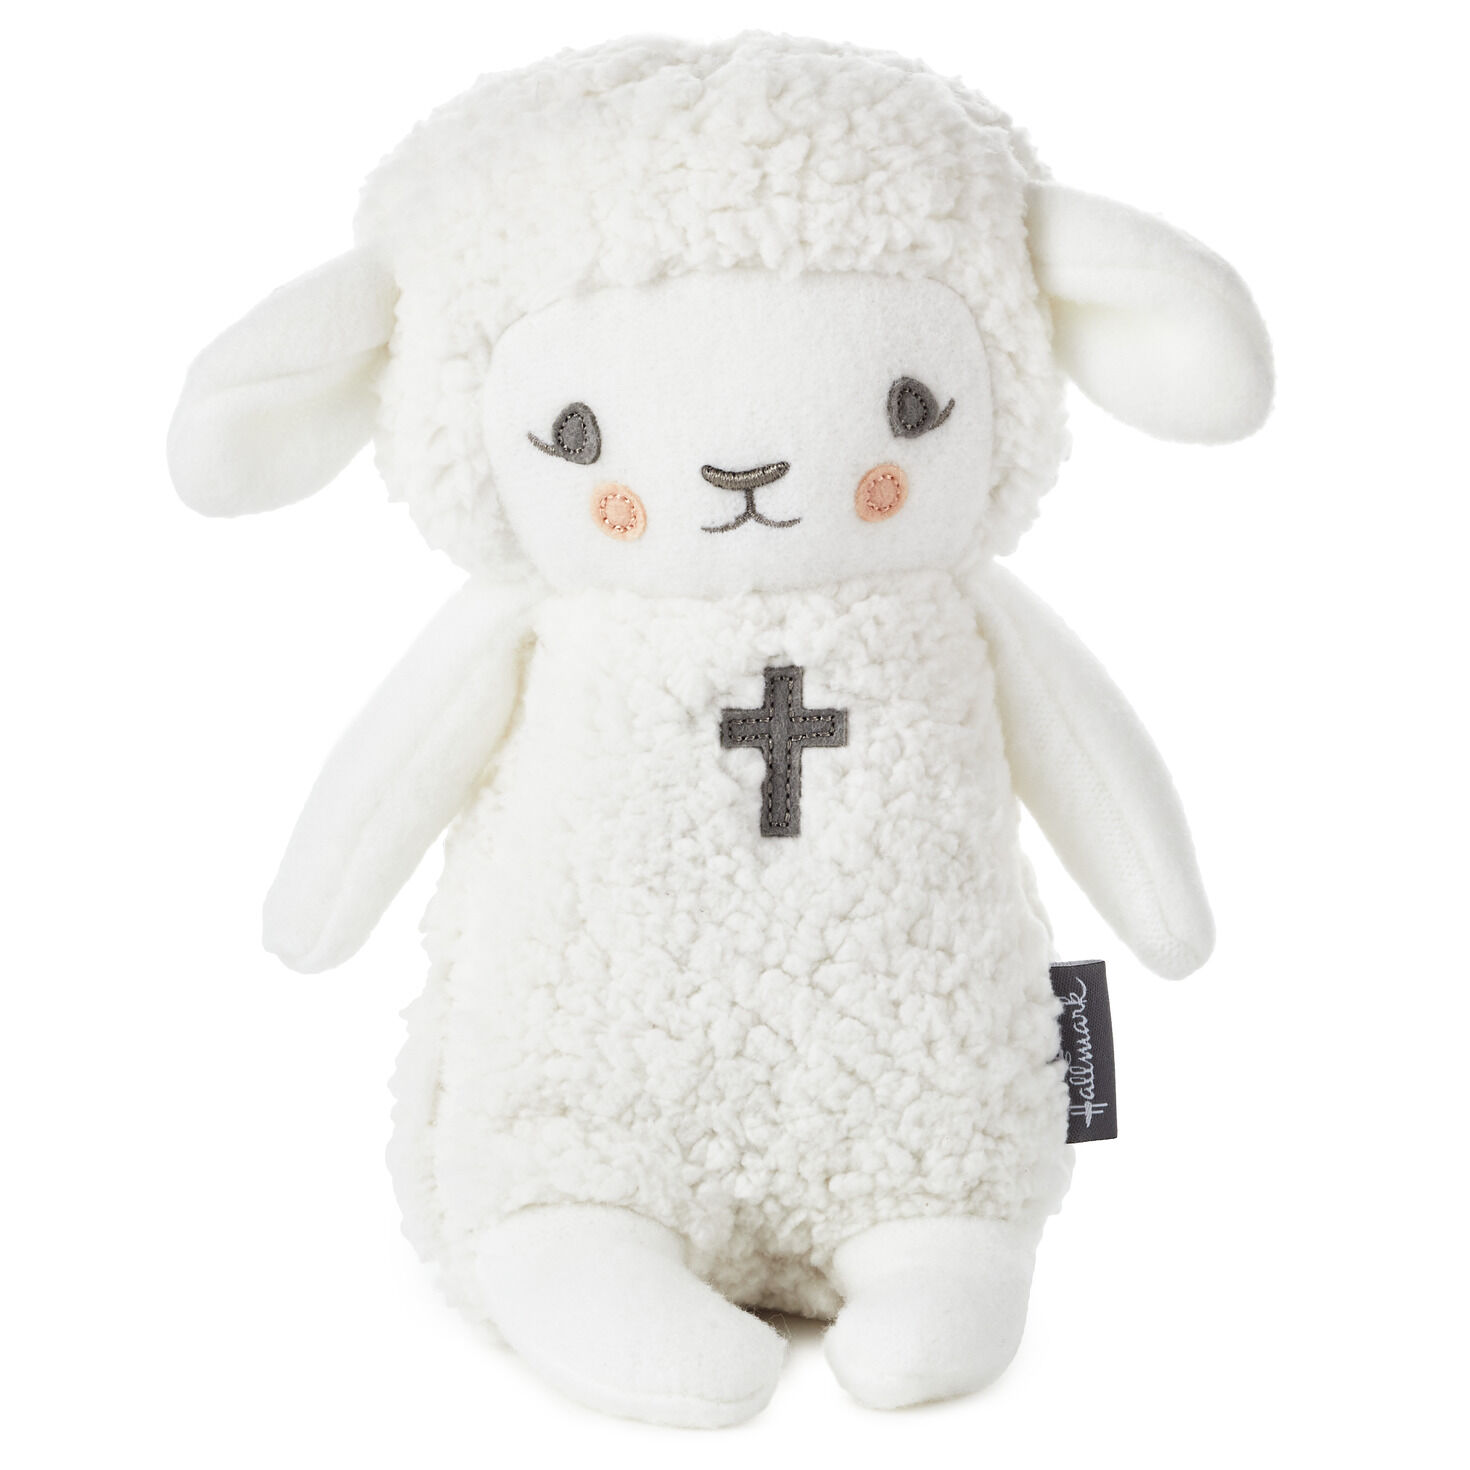 Lullaby Lamb Musical Stuffed Animal, 